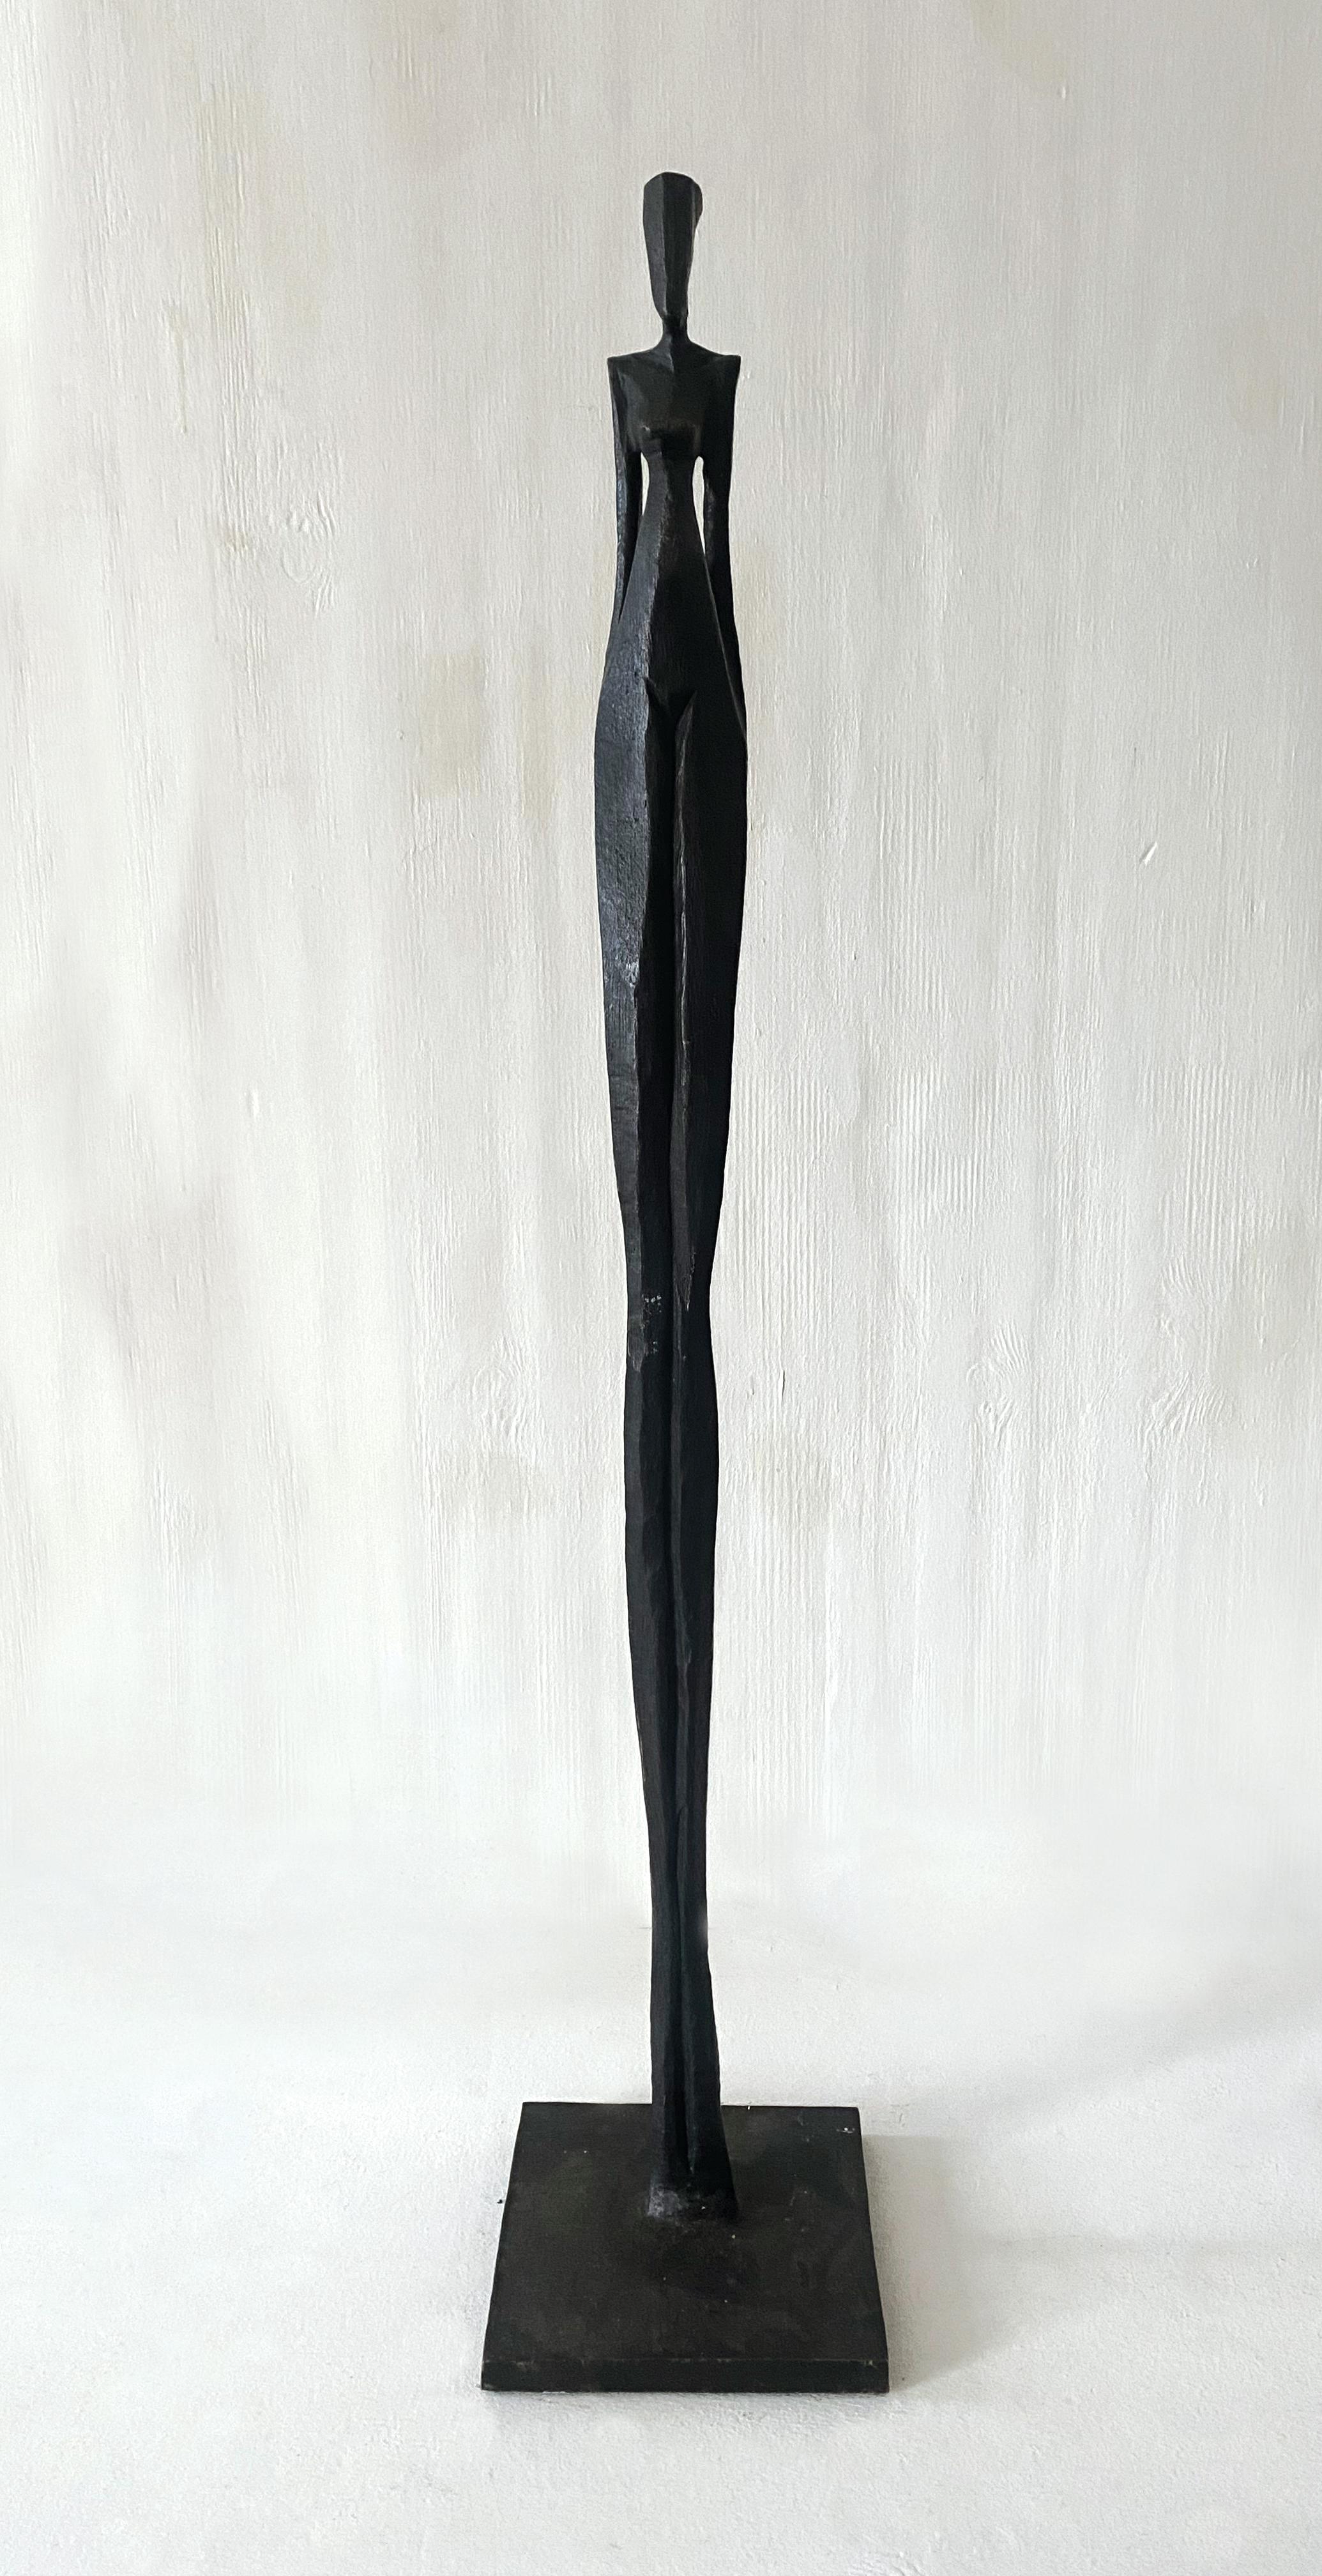 Kathy by Nando Kallweit. Tall, elegant bronze sculpture of human figure. 1